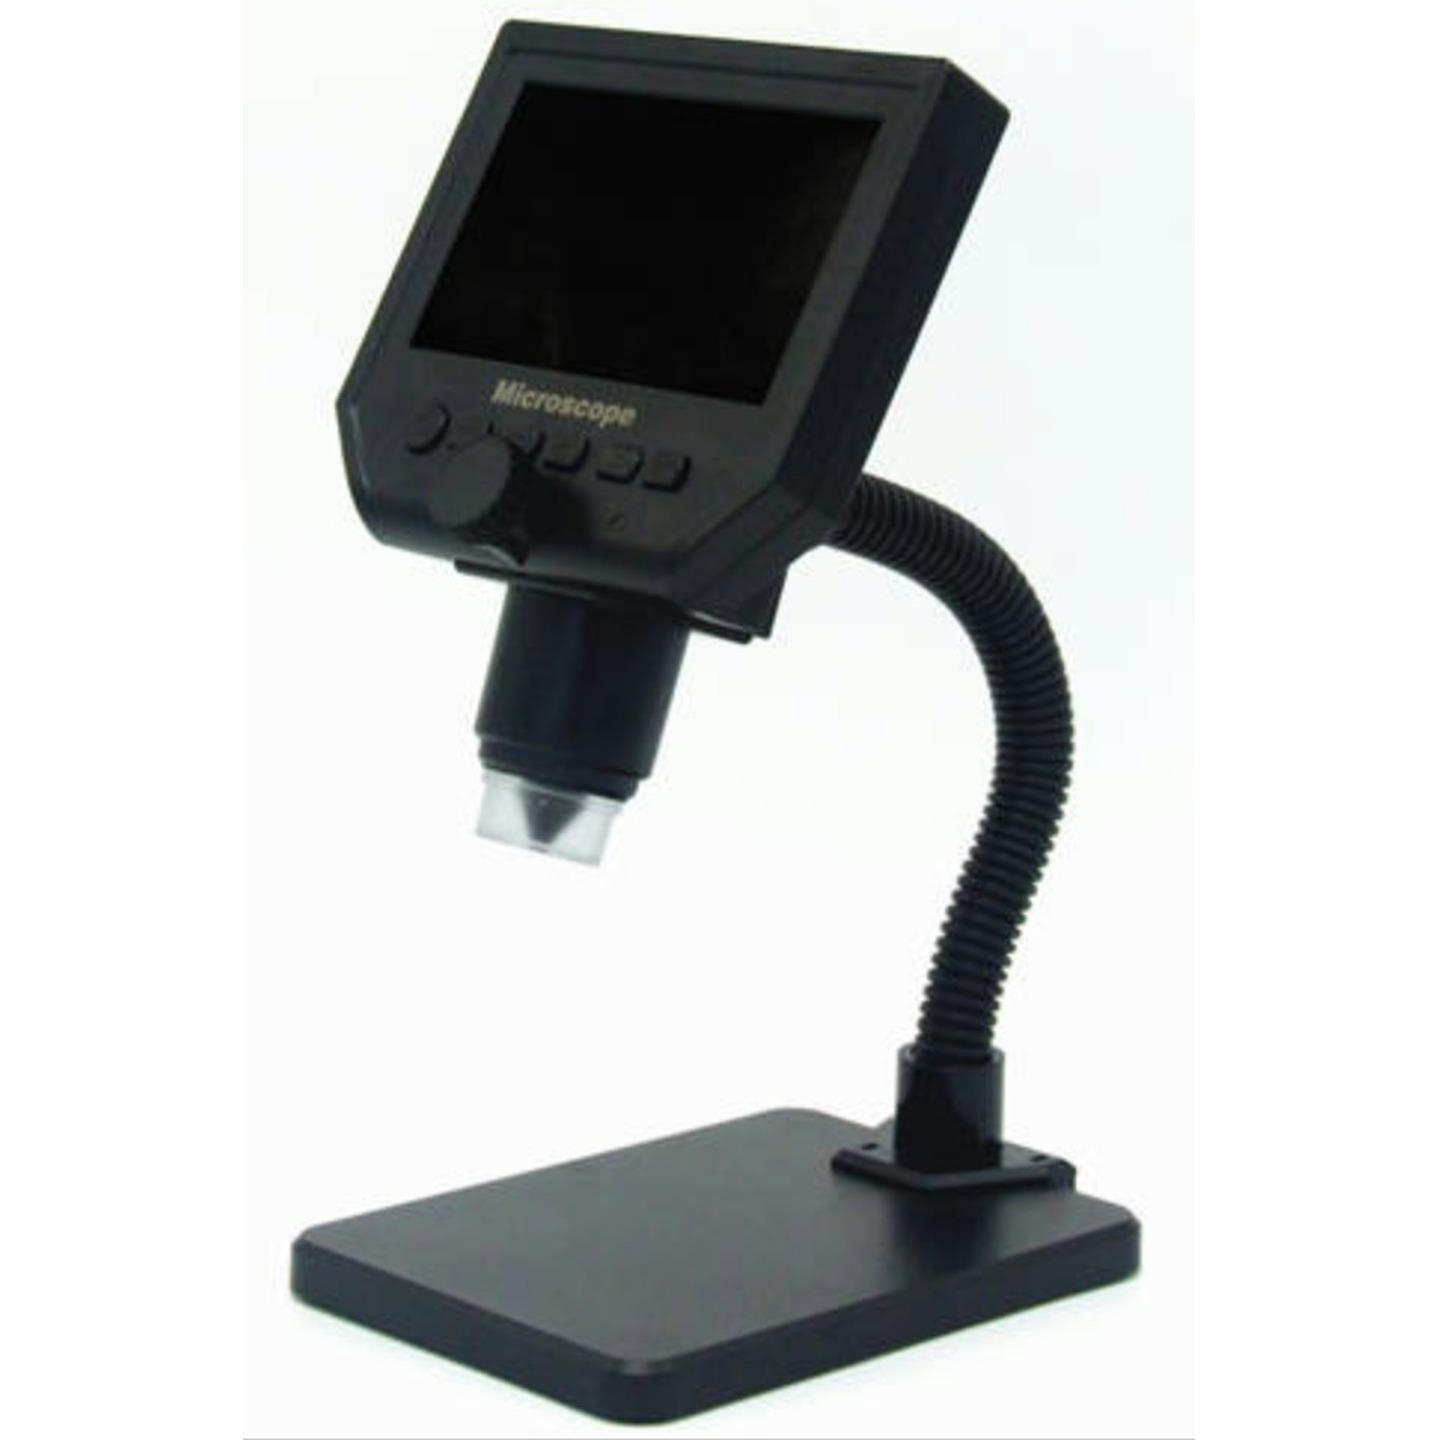 720P Digital Microscope with 4.3 Inch HD Screen and 3.6MP CCD Sensor